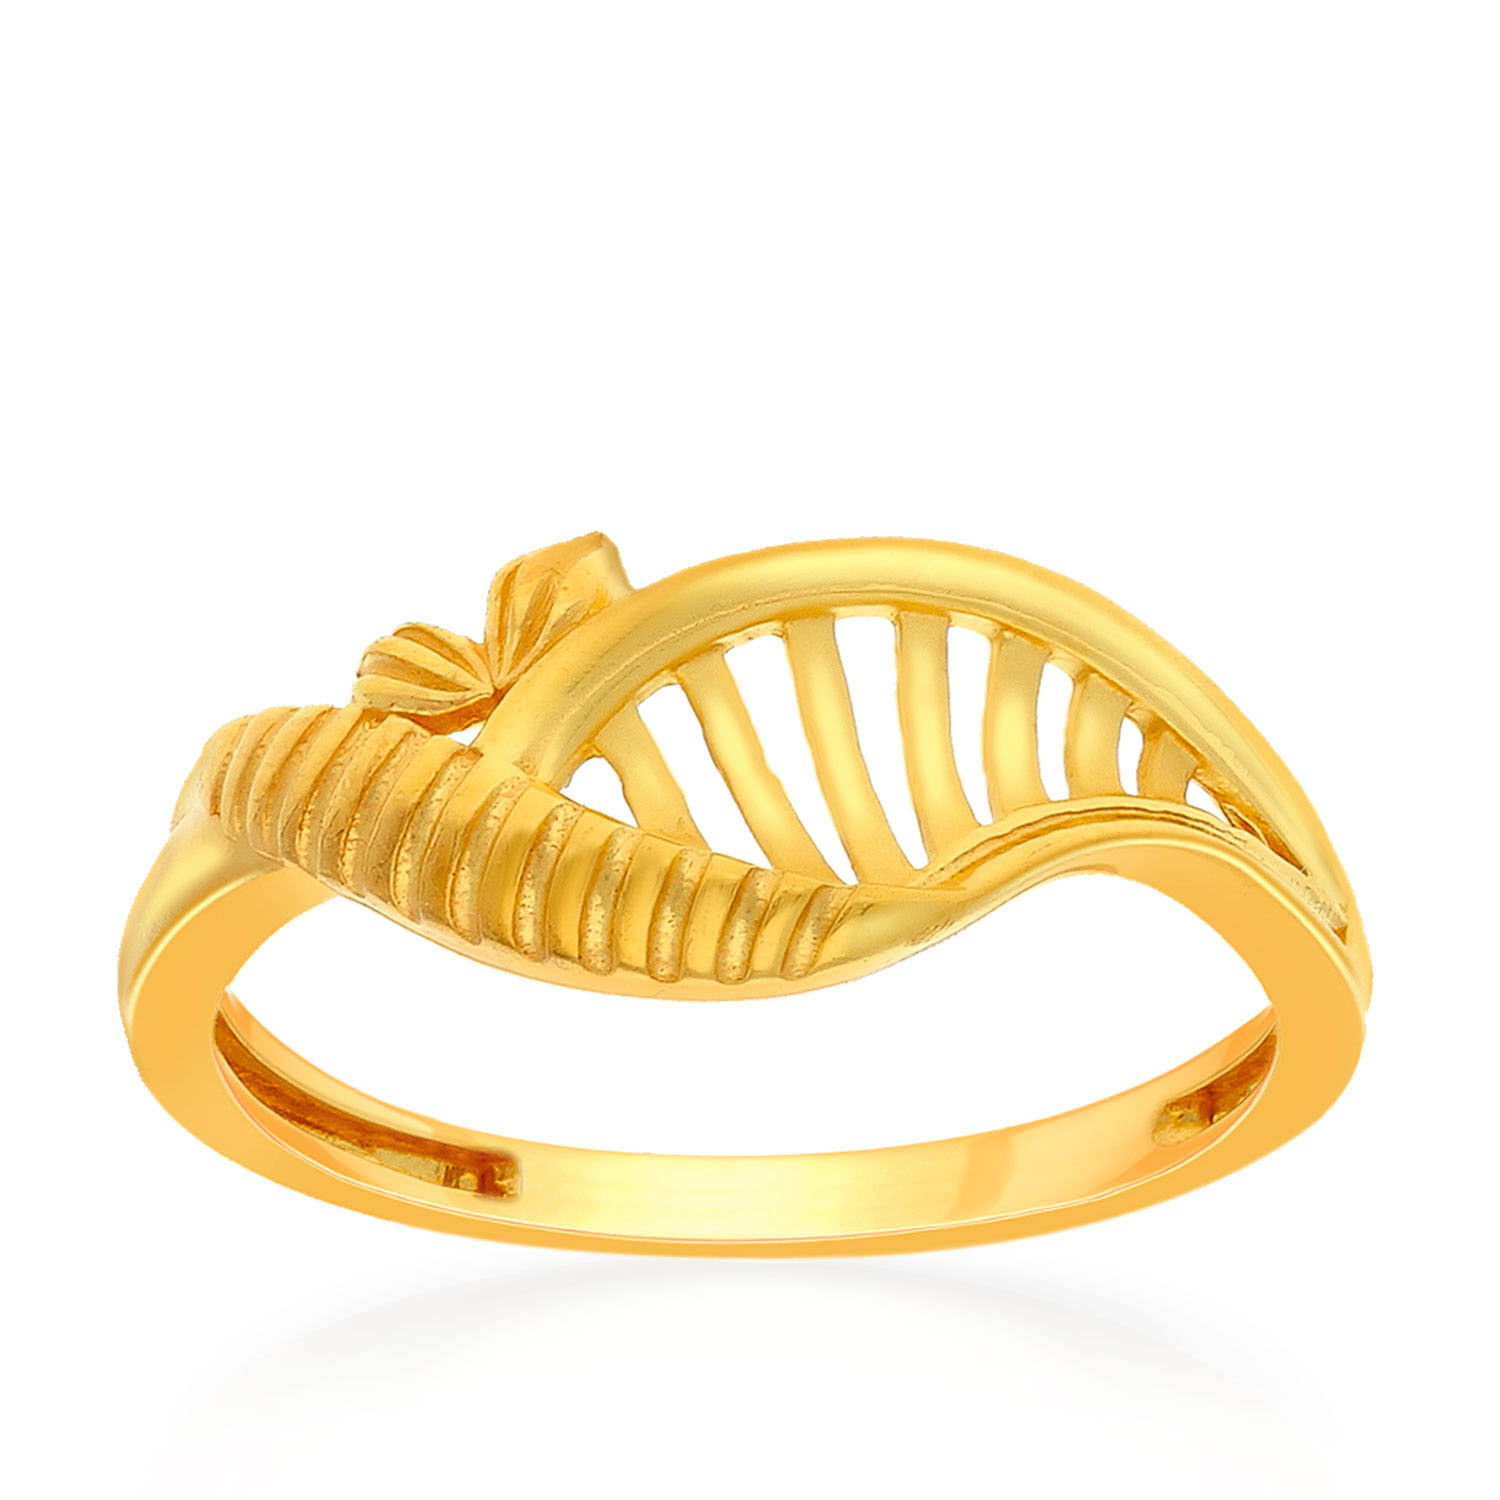 Buy Malabar Gold Ring RG8712885 for Women Online | Malabar Gold & Diamonds